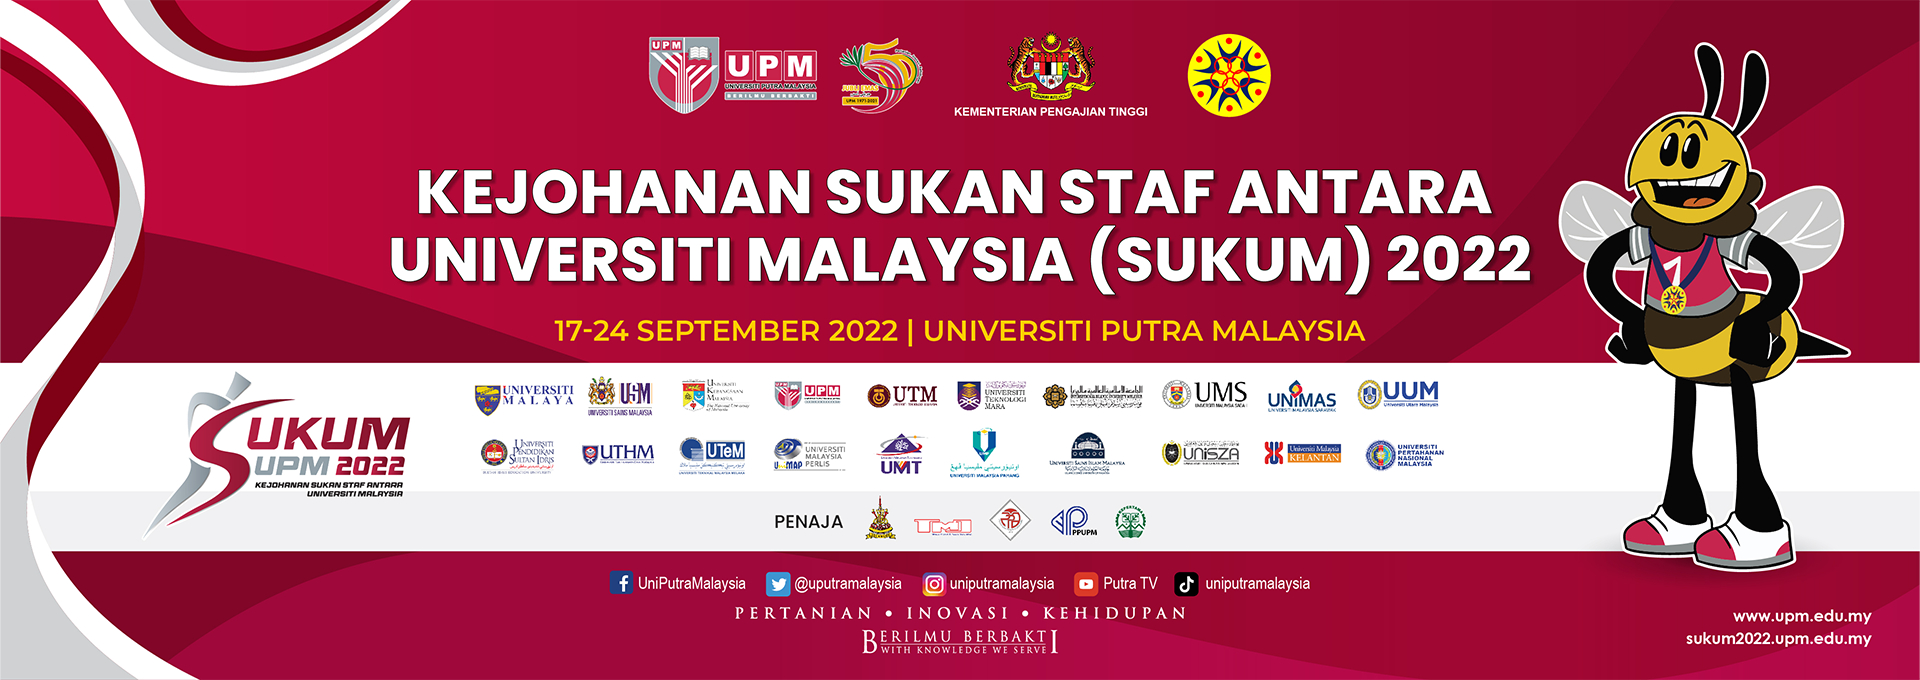 KEJOHANAN SUKAN STAF ANATARA UNIVERSITI MALAYSIA (SUKUM) 2022